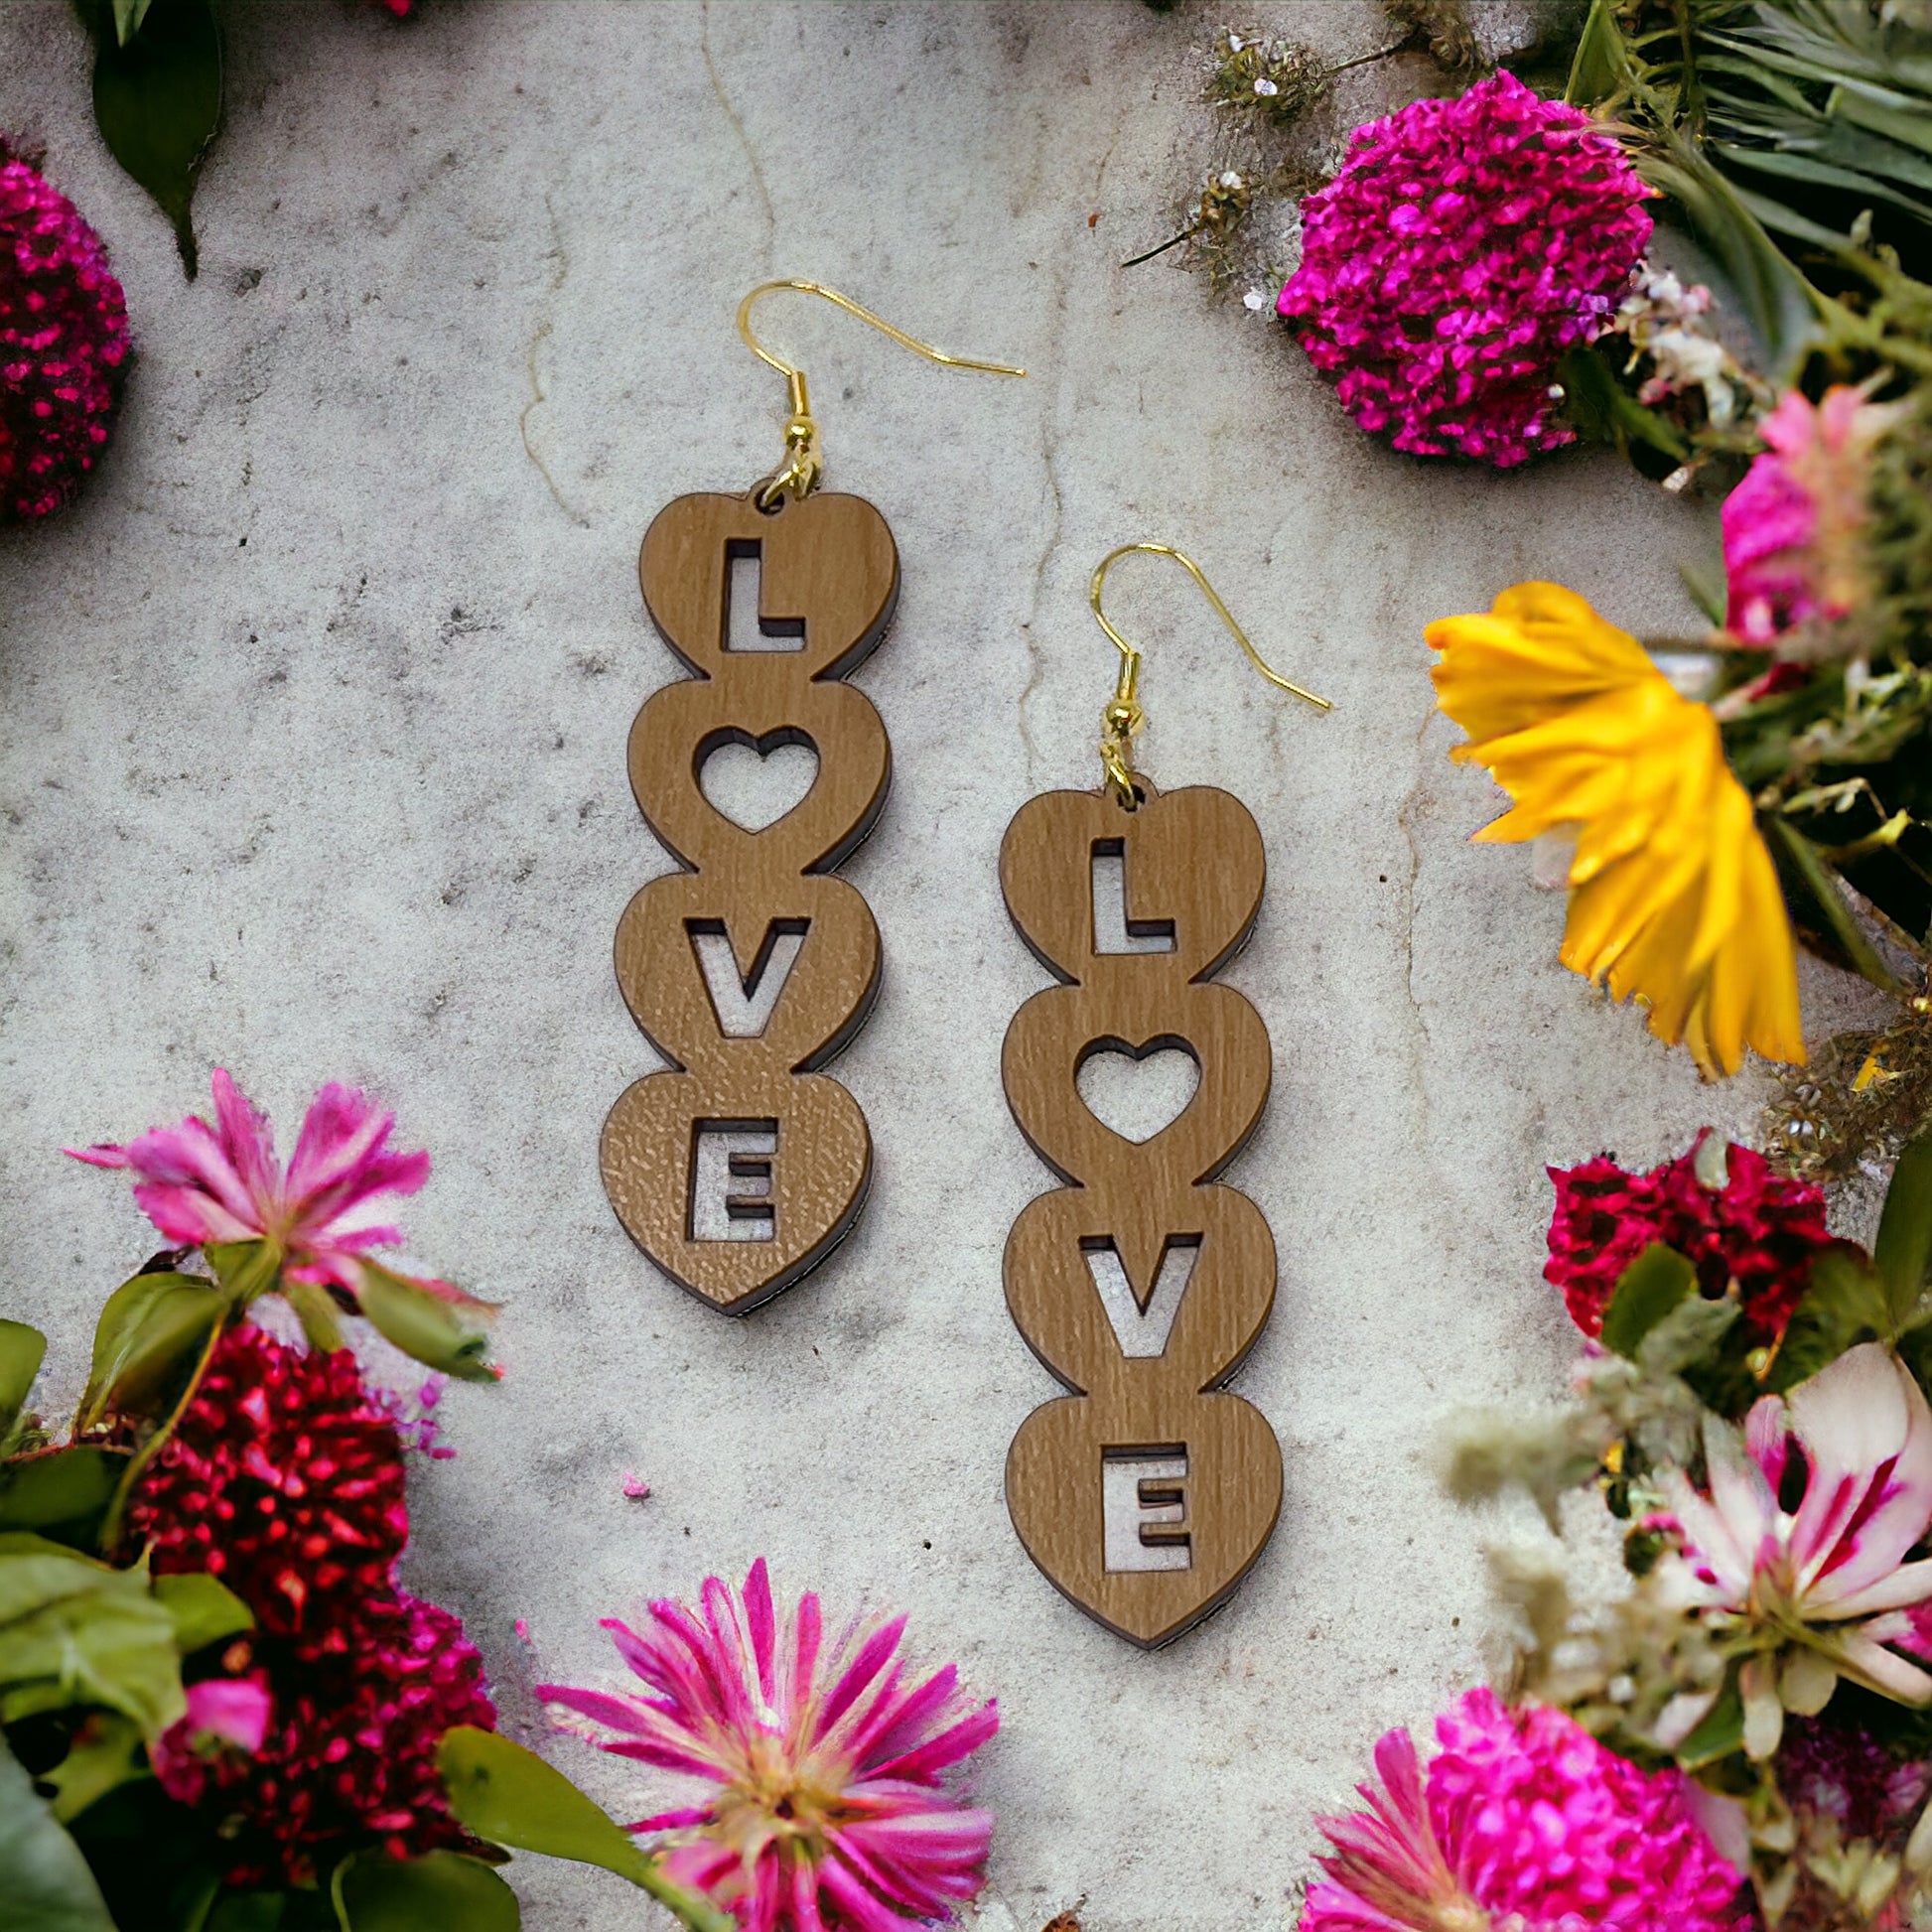 Heart Earrings with Cutout Letters that Spell Love - Rustic Valentine's Dangle Earrings